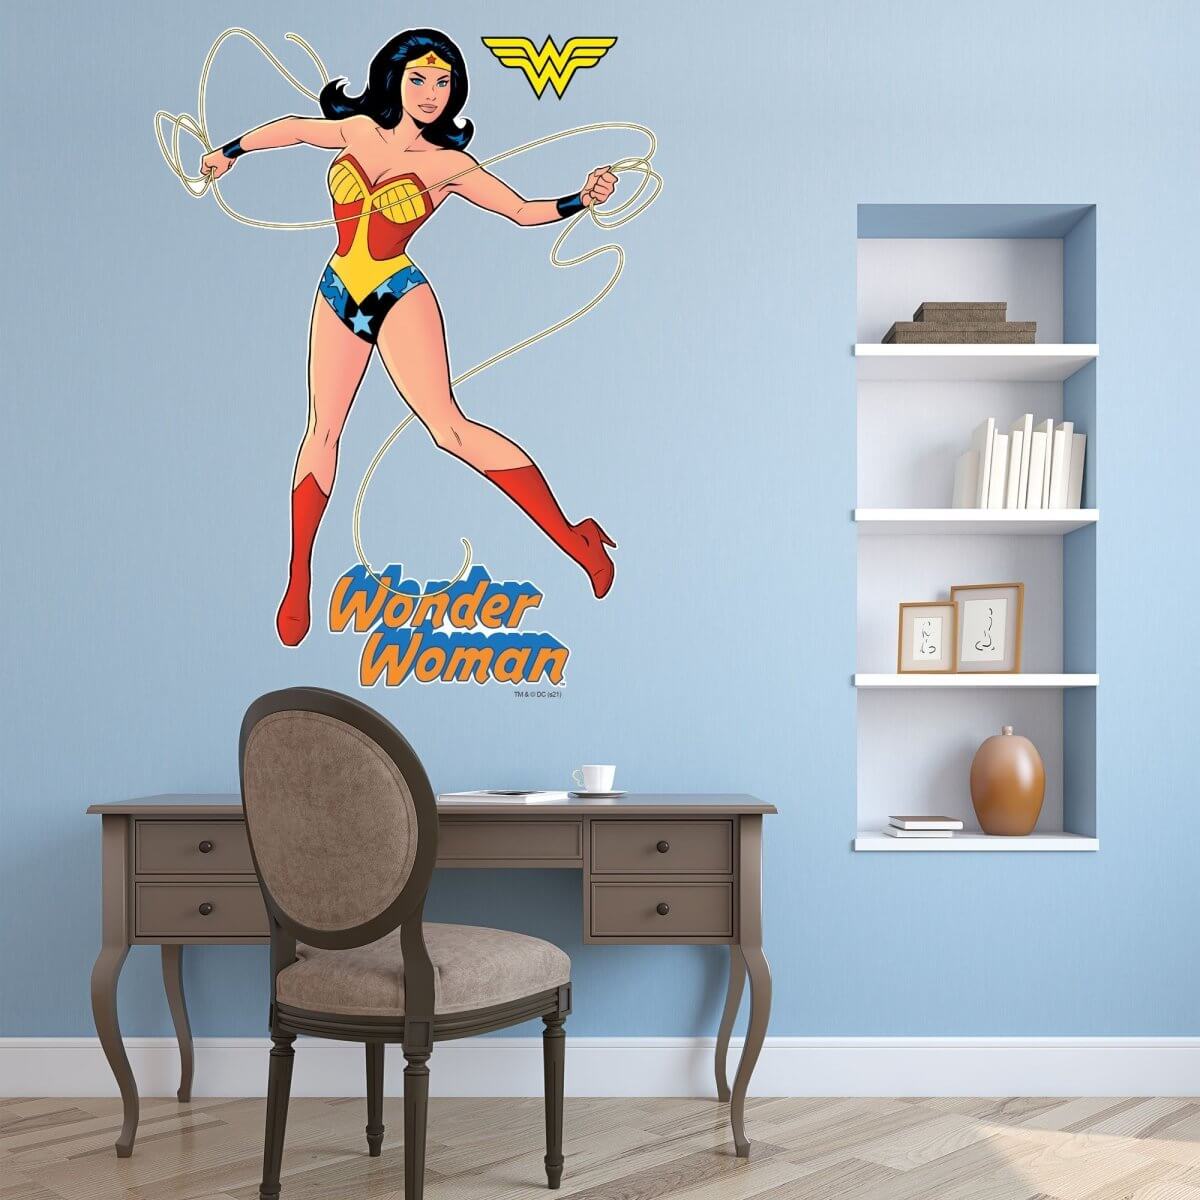 Kismet Decals Evolution of Wonder Woman Original Artwork 1972 Officially Licensed Wall Sticker - Easy DIY DC Comics Home, Kids or Adult Bedroom, Office, Living Room Decor Wall Art - Kismet Decals